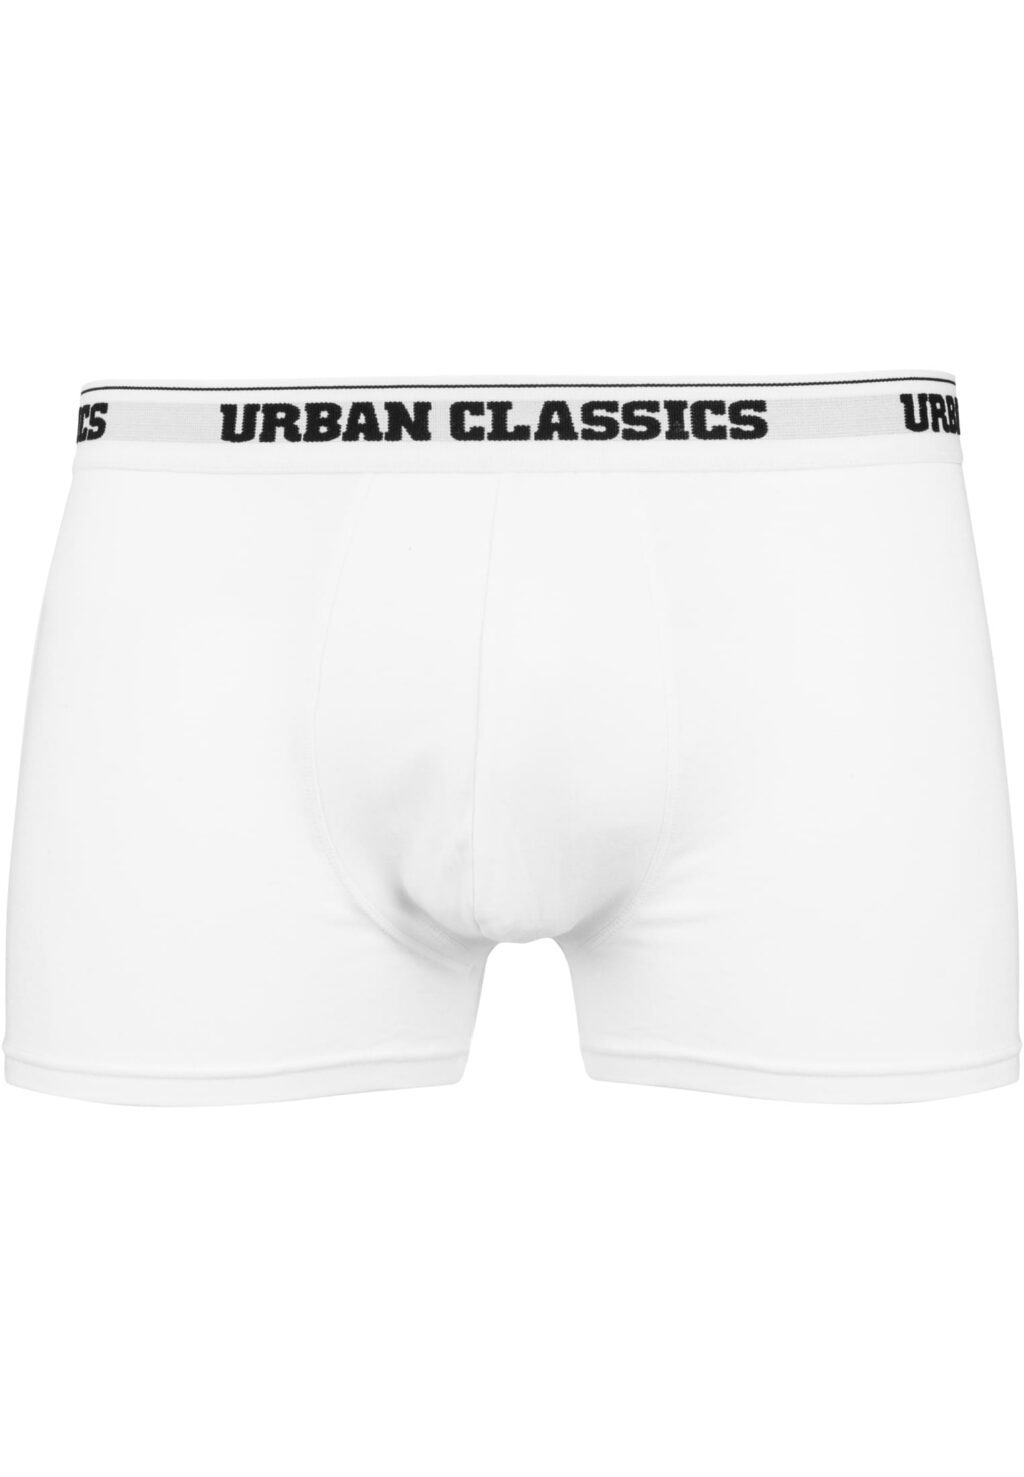 Urban Classics Organic Boxer Shorts 3-Pack mini stripe aop+white+cherry TB3838